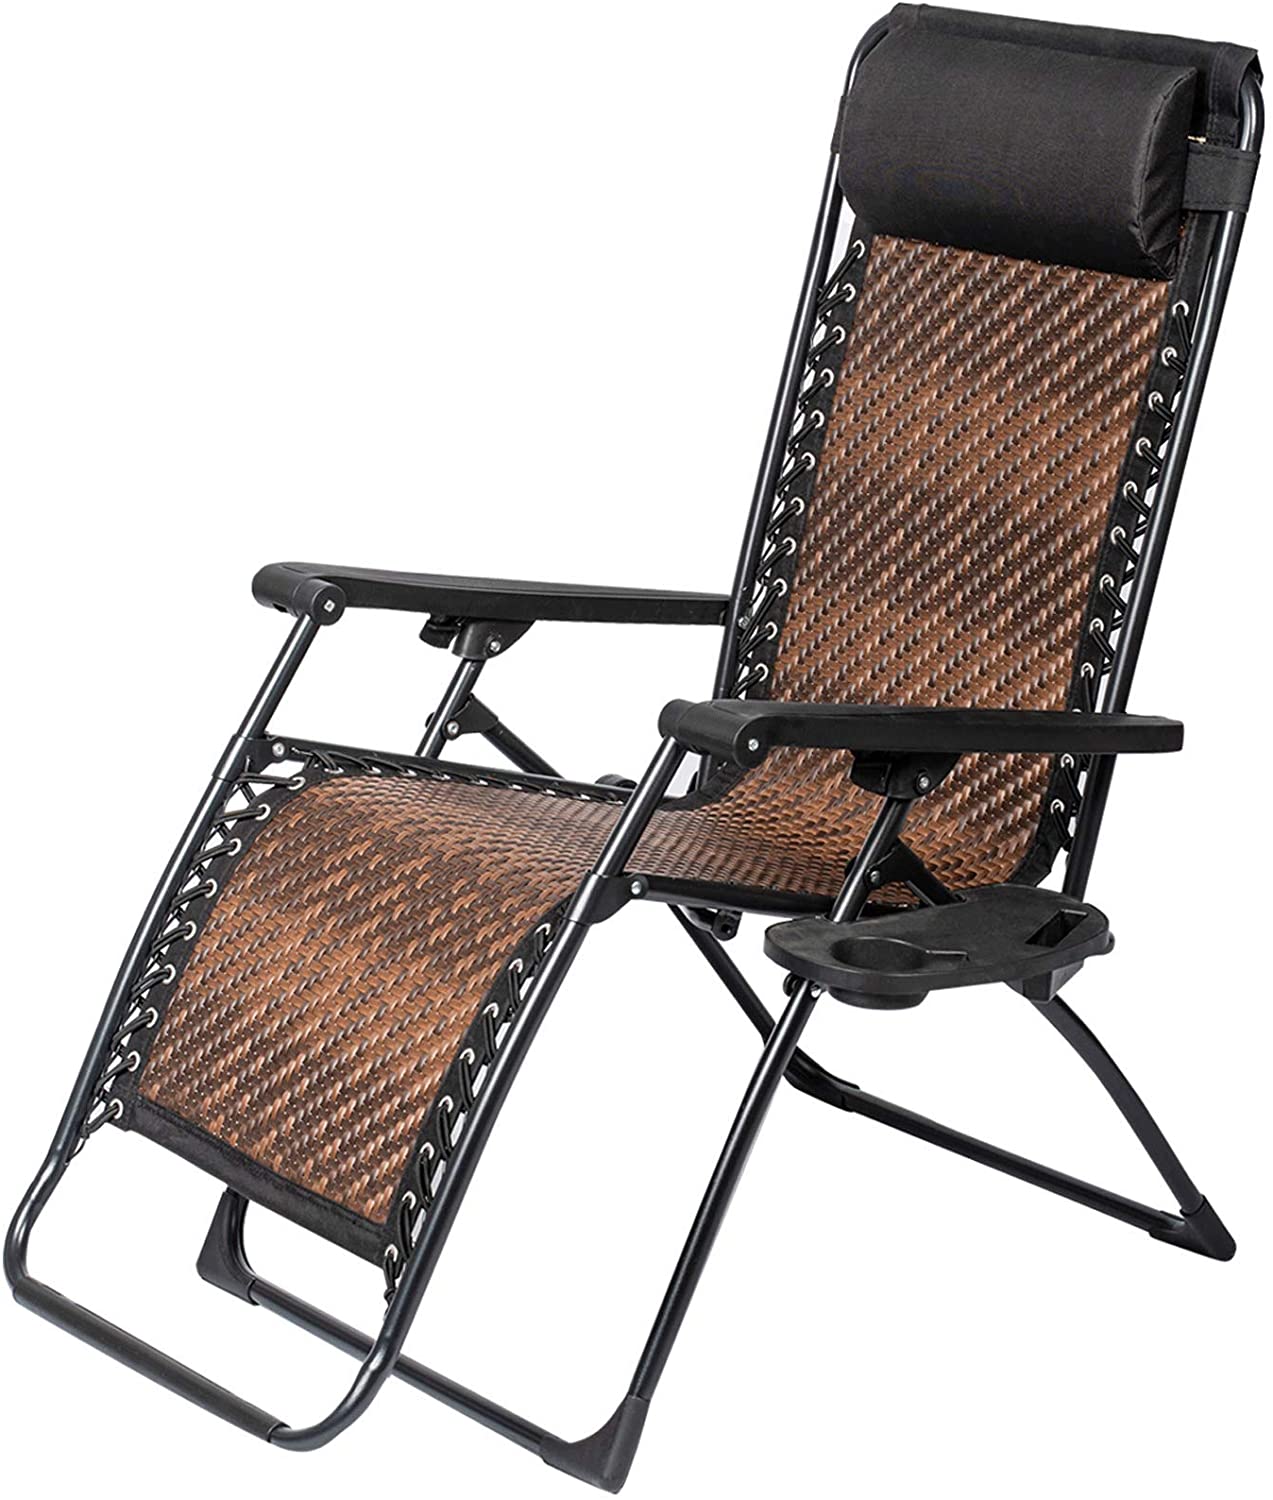 SOLAURA Outdoor Zero Gravity Lounge Chair Patio Adjustable Folding Wicker Recliner - Brown - image 1 of 6